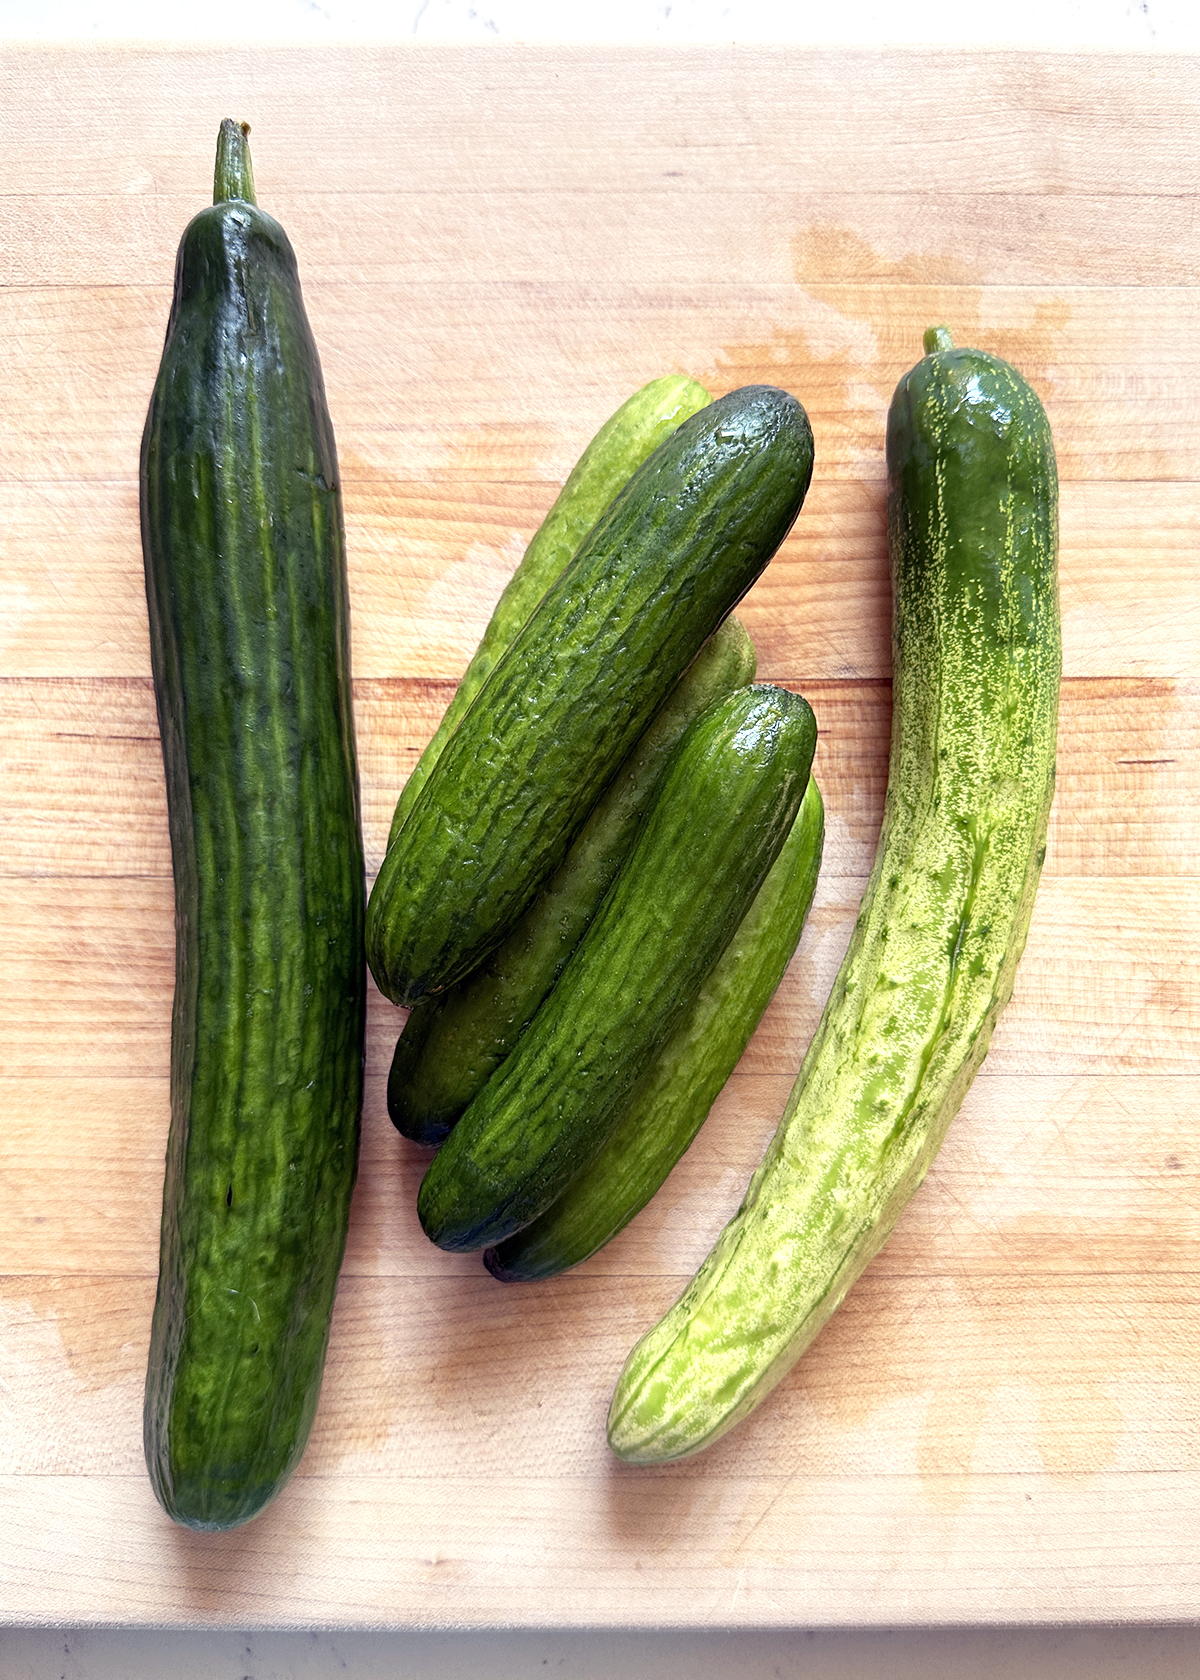 English, Persian, Korean cucumbers for comparison